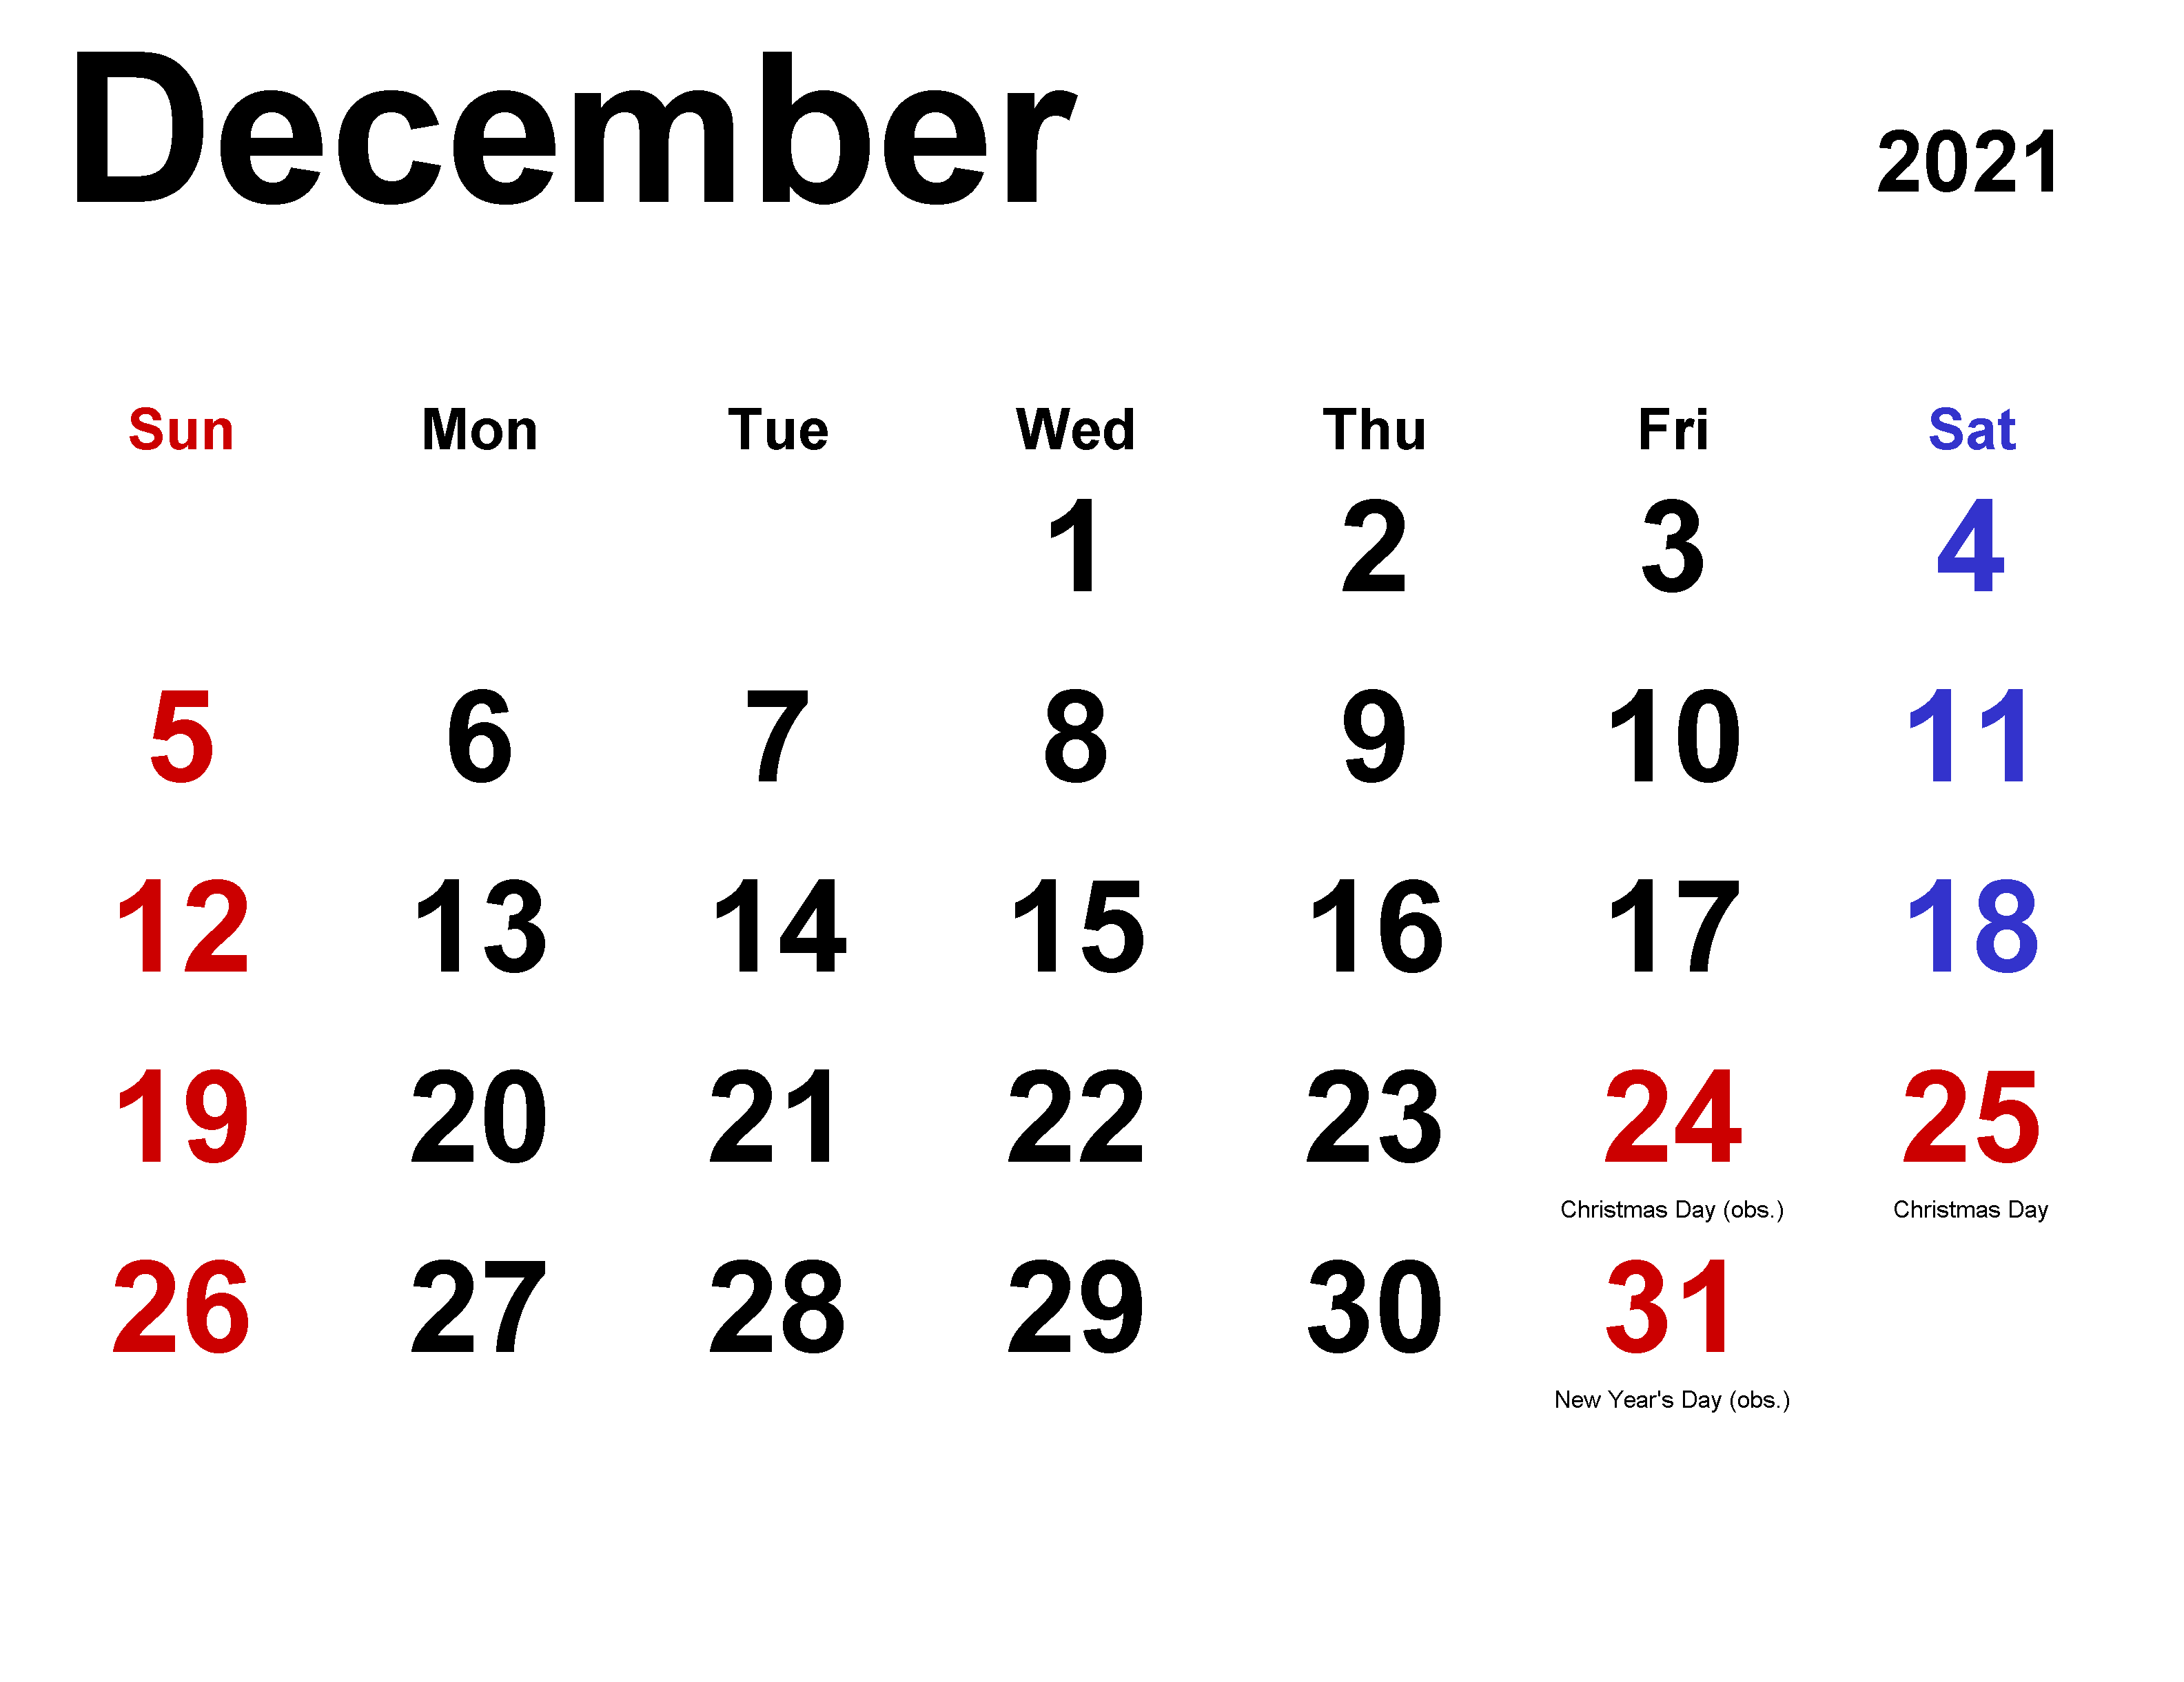 December 2021 Calendar Template for Excel